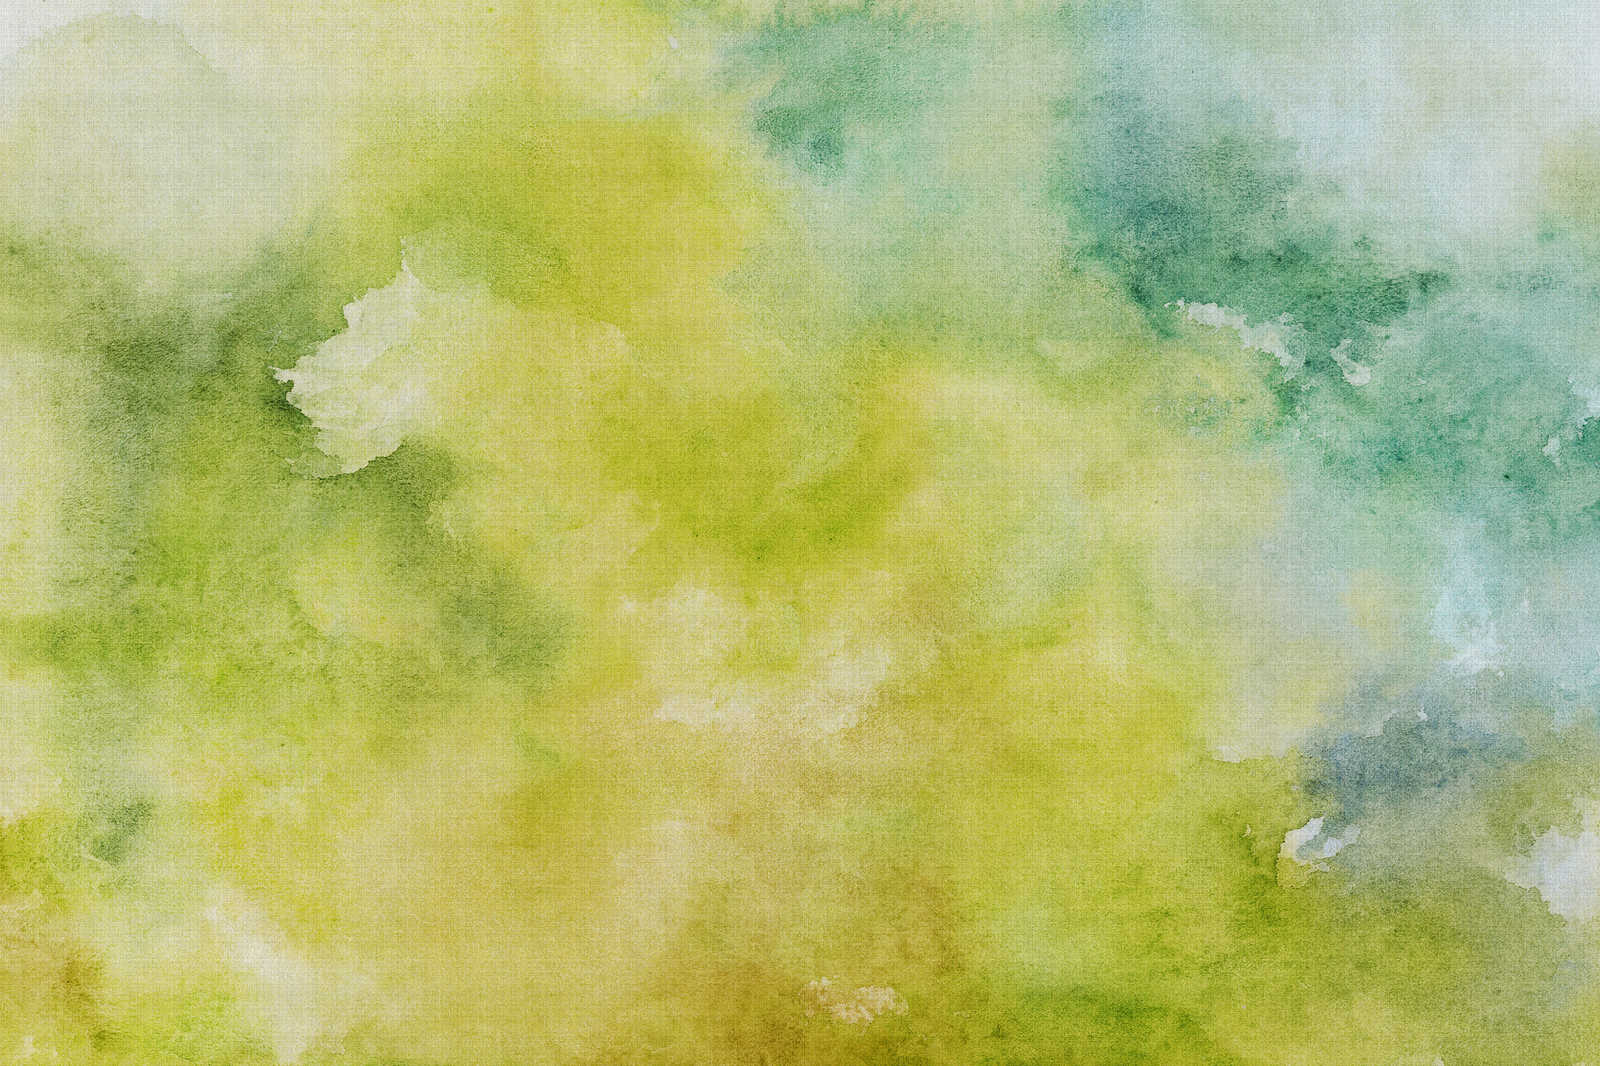             Watercolours 3 - Grünes Wasserfarben Motiv als Leinwandbild in naturleinen Optik – 1,20 m x 0,80 m
        